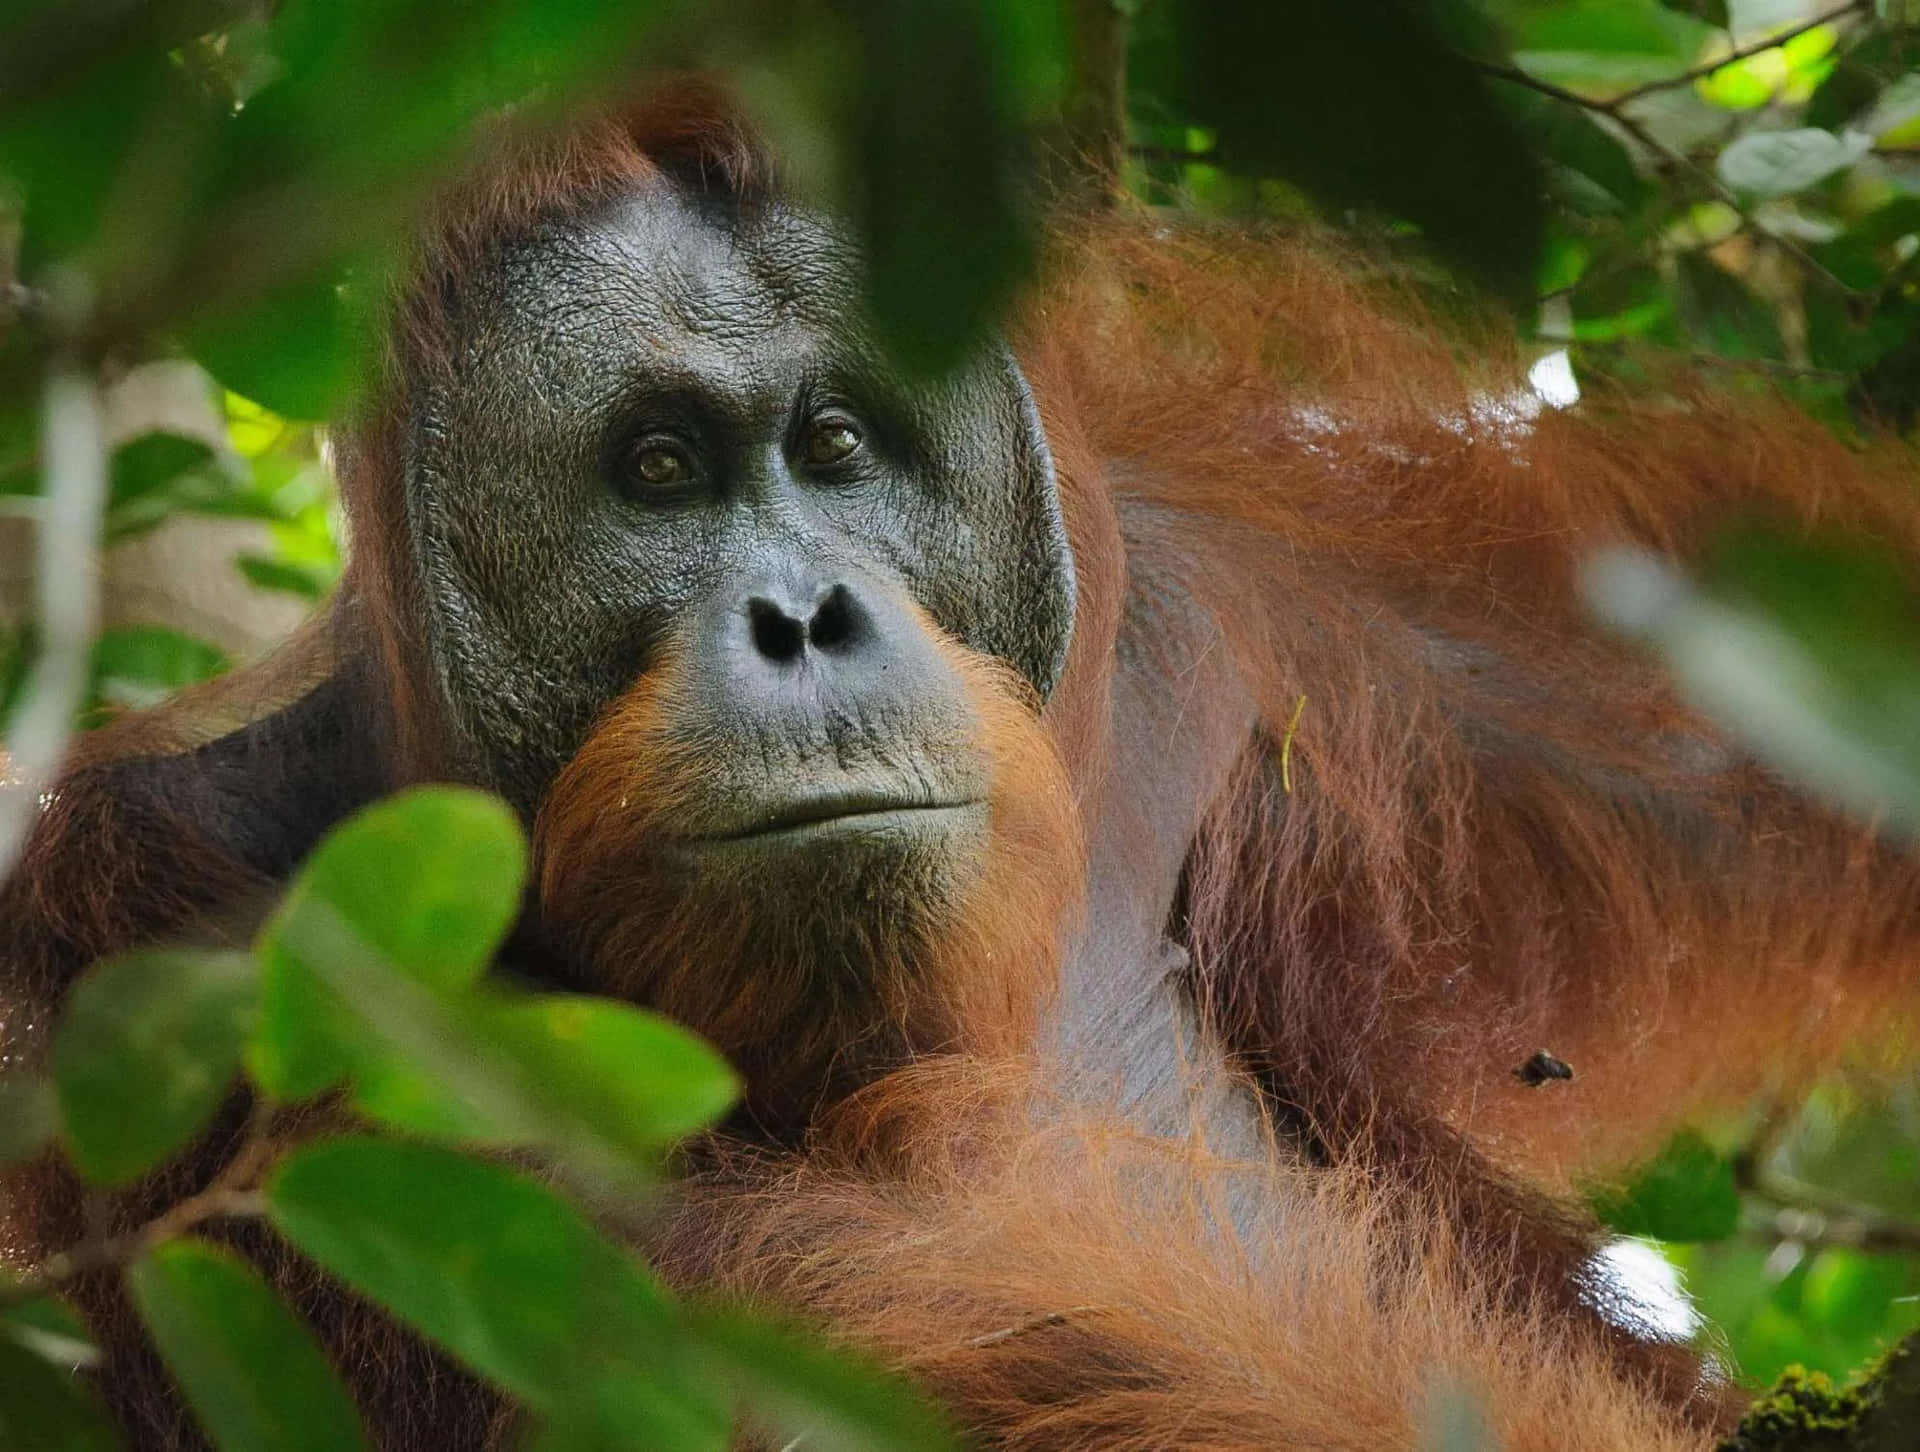 A Majestic Orangutan Reminiscent of Nature